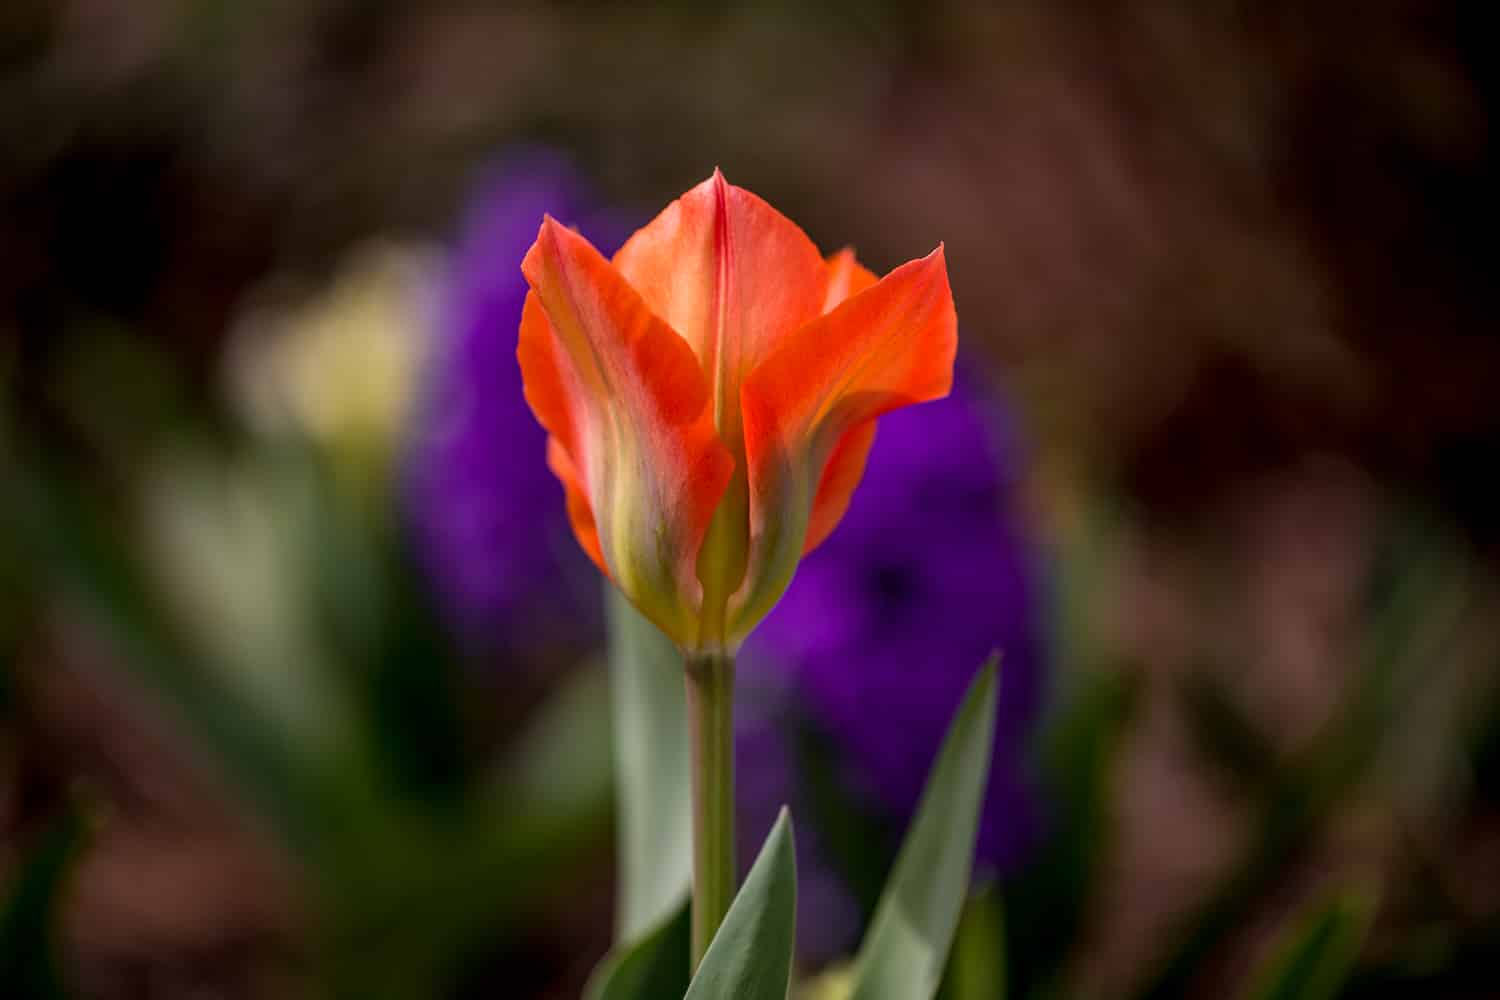 Orange and purple flower